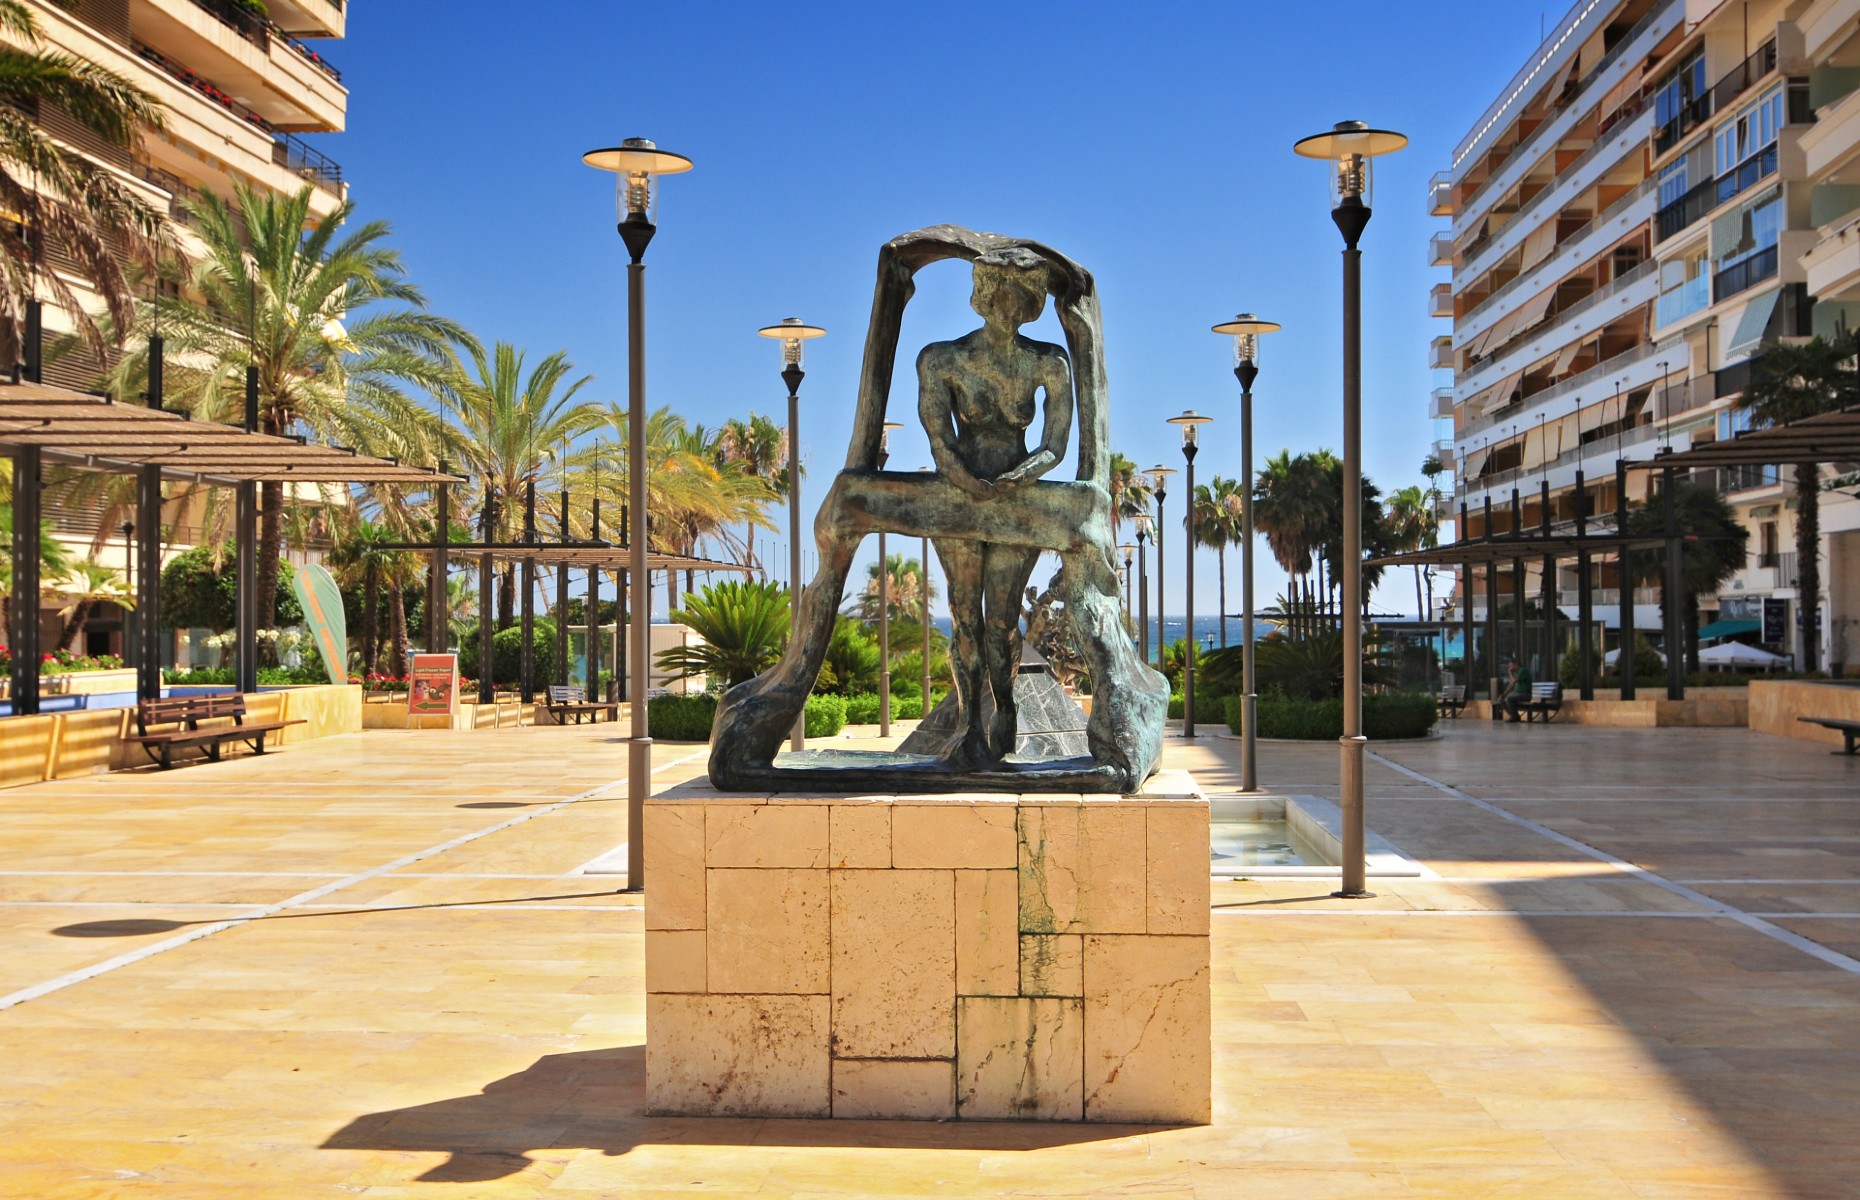 A Salvador Dali sculpture on Avenida del Mar (Image: Cezary Wojtkowski/Shutterstock)